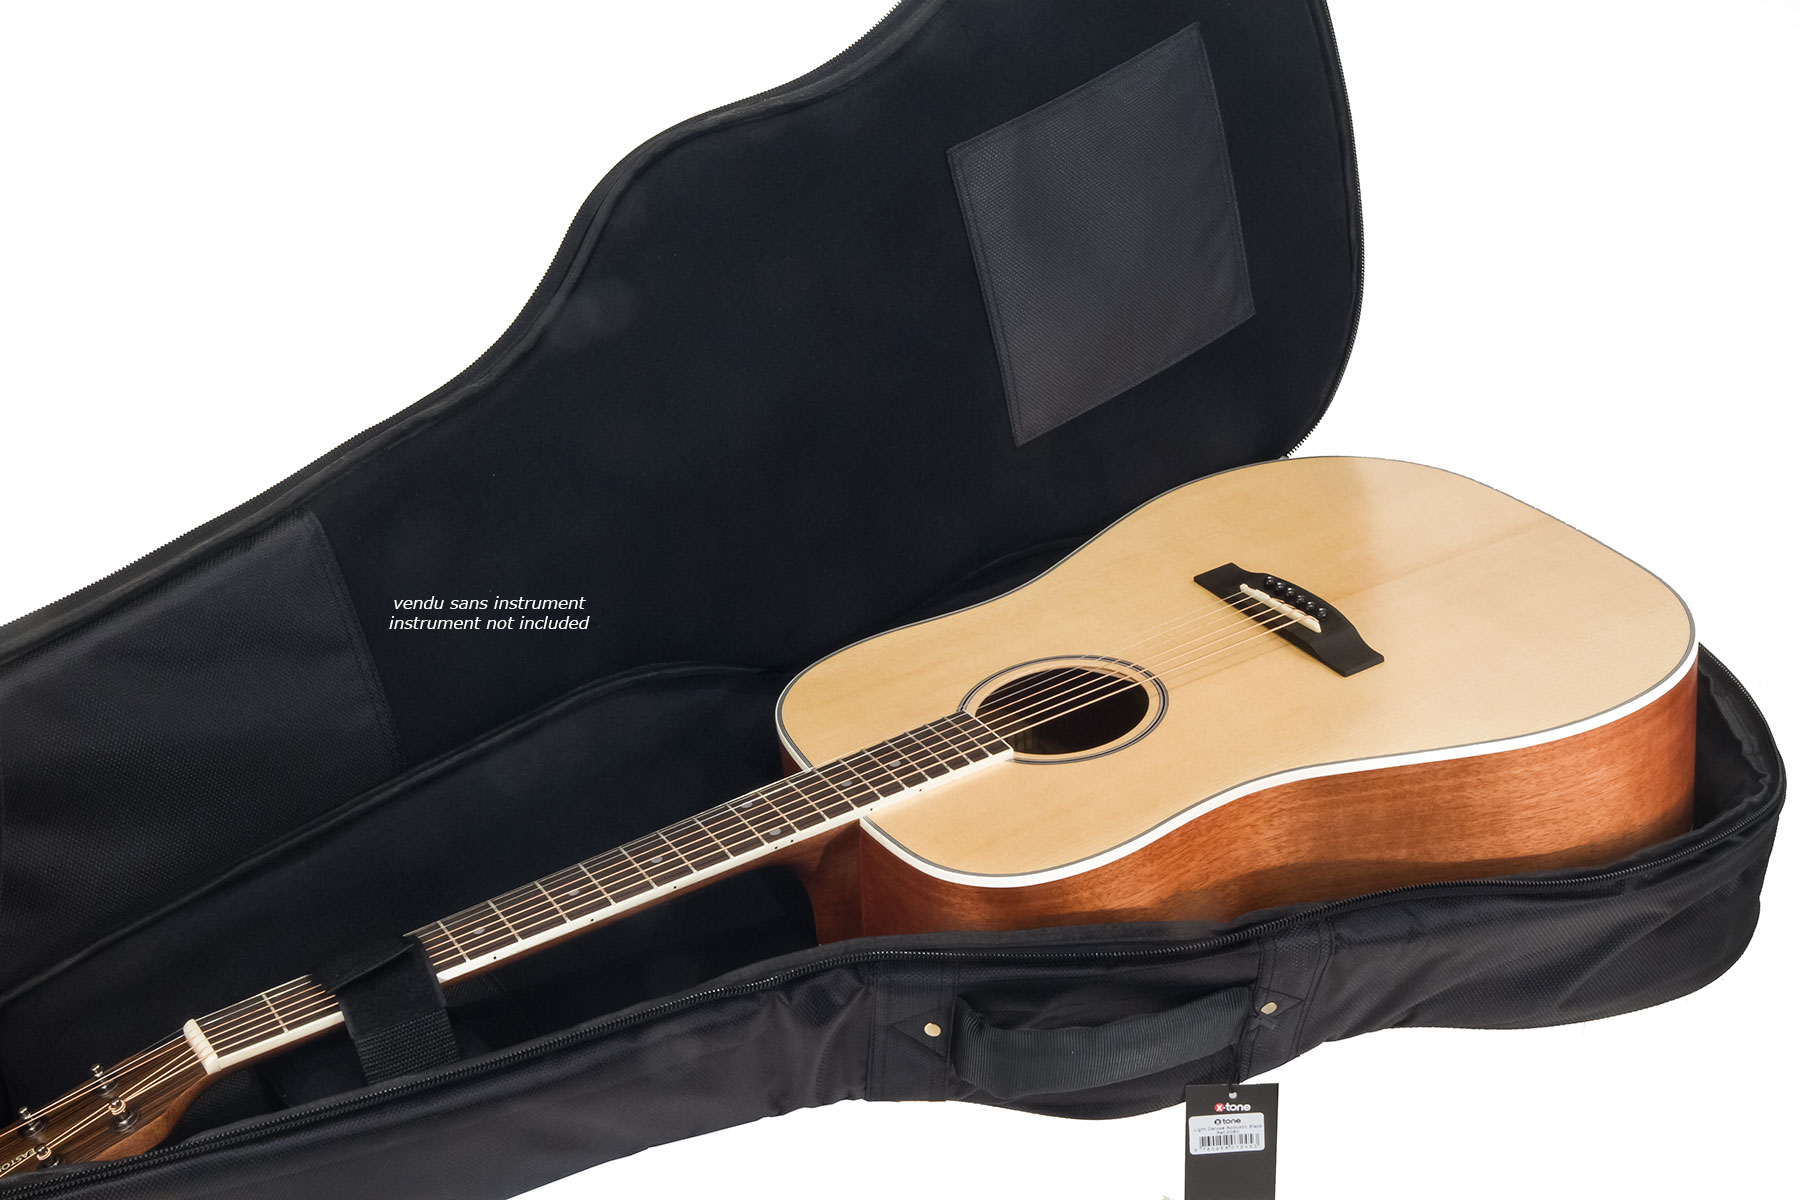 X-tone 2020 Fol-bk Light Deluxe Acoustic Dreadnought Guitar Bag Black (2080) - Westerngitarretasche - Variation 5